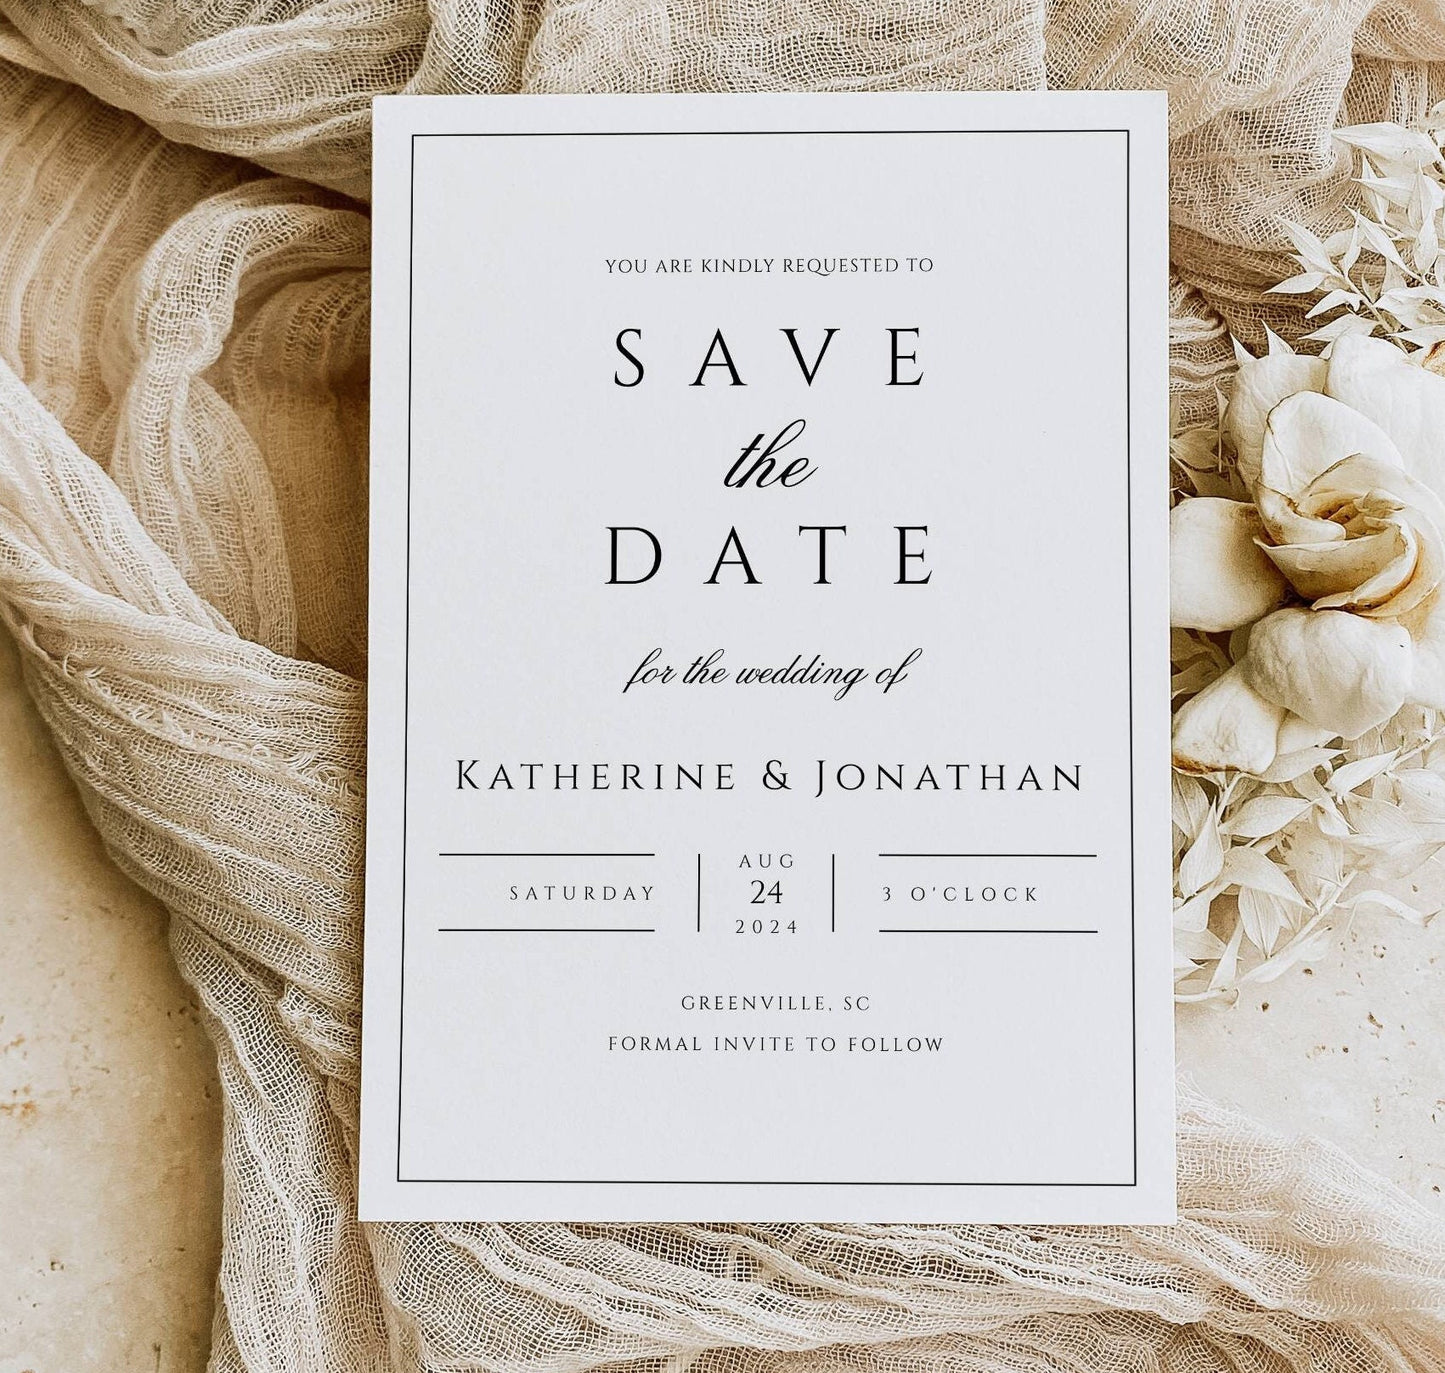 Wedding Save The Dates, Editable Template, Save The Date Cards, Save the Dates, Edit with Templett, TRA